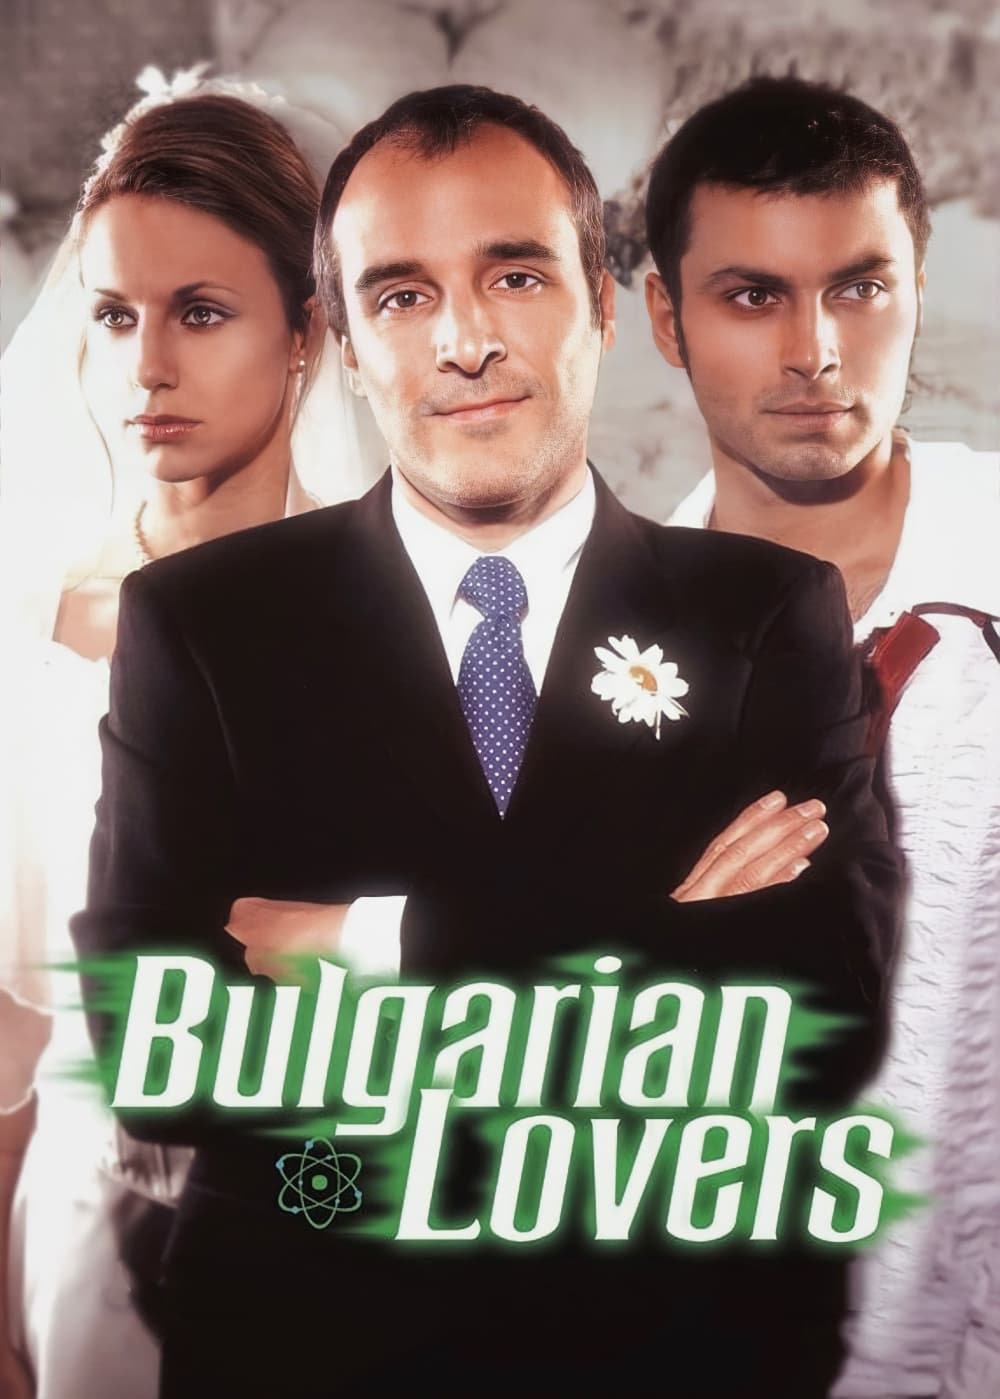 Bulgarian Lovers (2003)